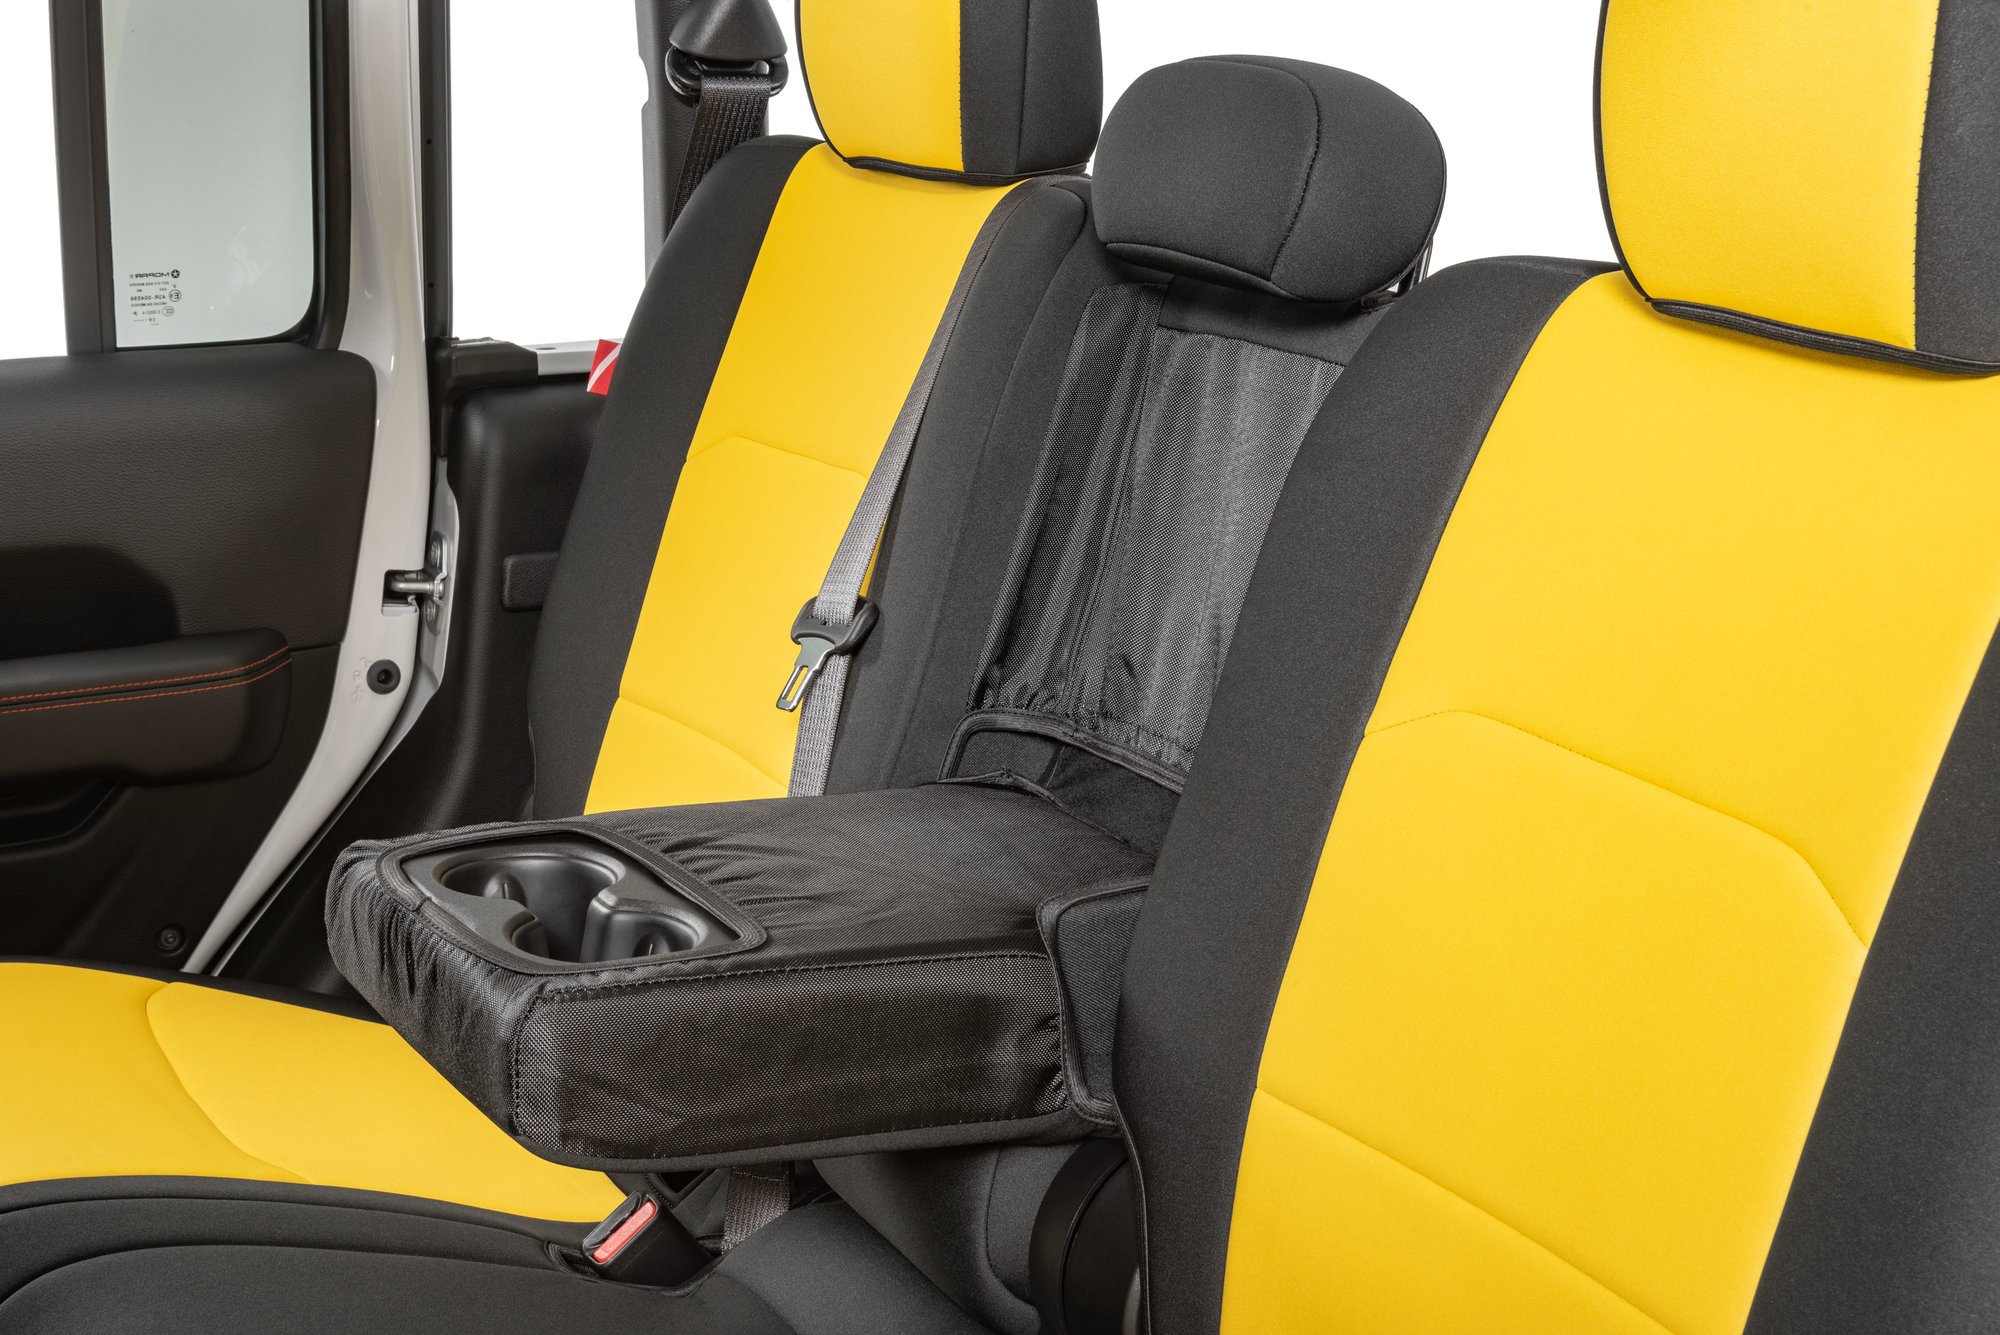 ACA Leatherette Car Seat Cover Set 9 Piece